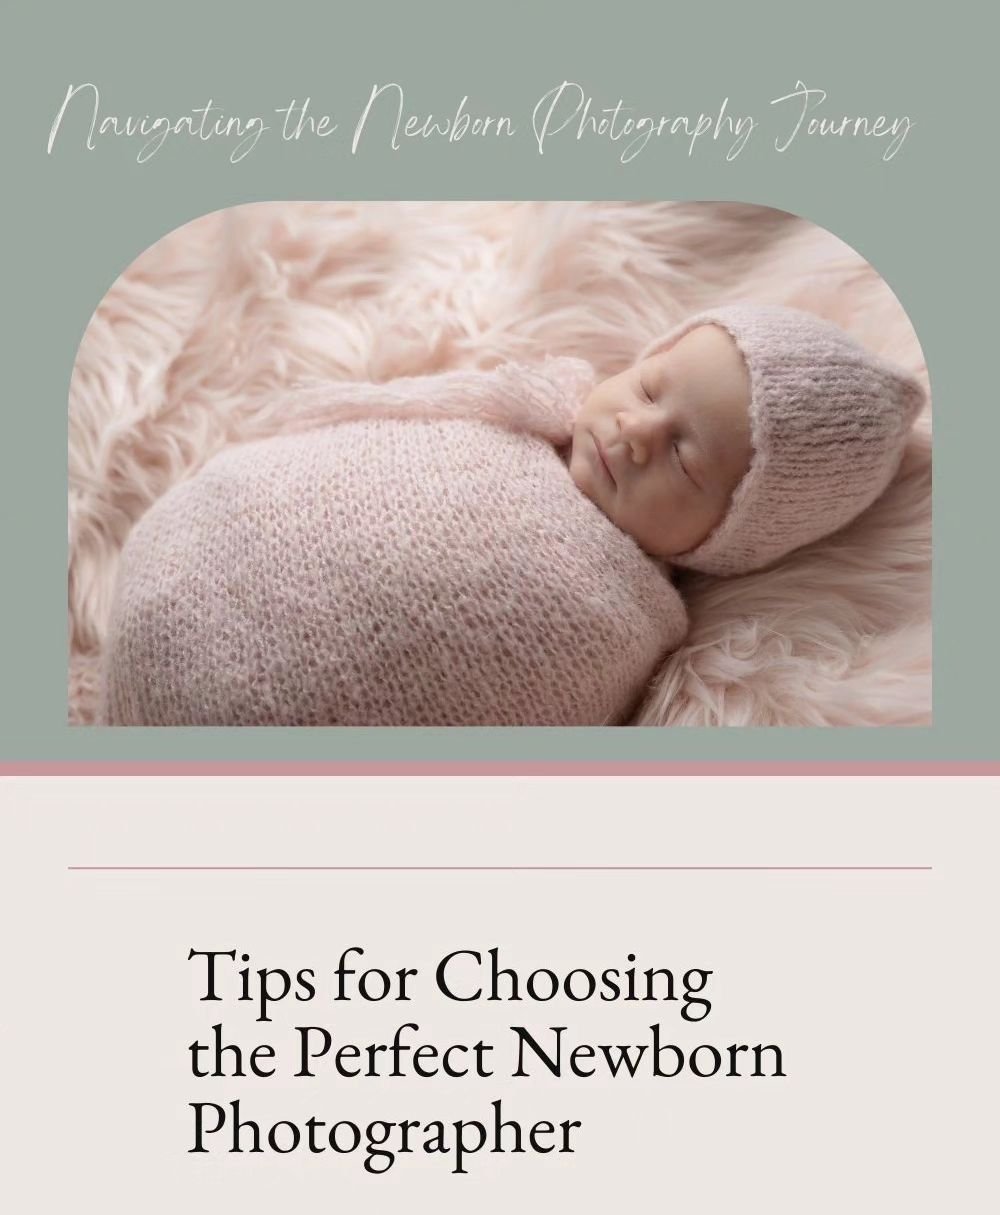 New blog post: https://www.shawnspencerphotography.com/blog/tips-for-choosing-newborn-photographer